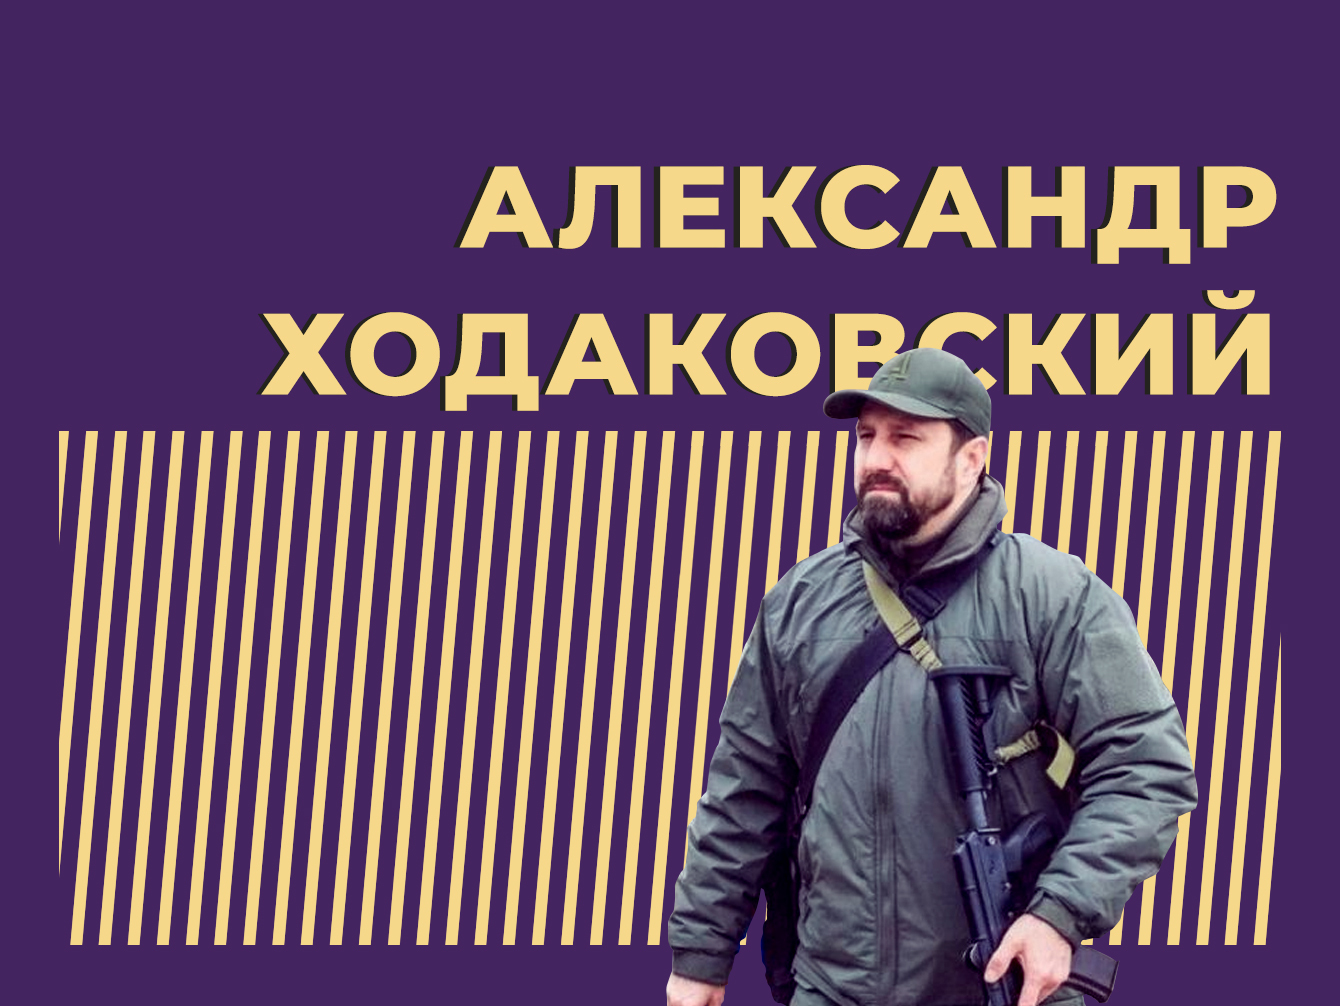 Александр Ходаковский: биография лидера ДНР